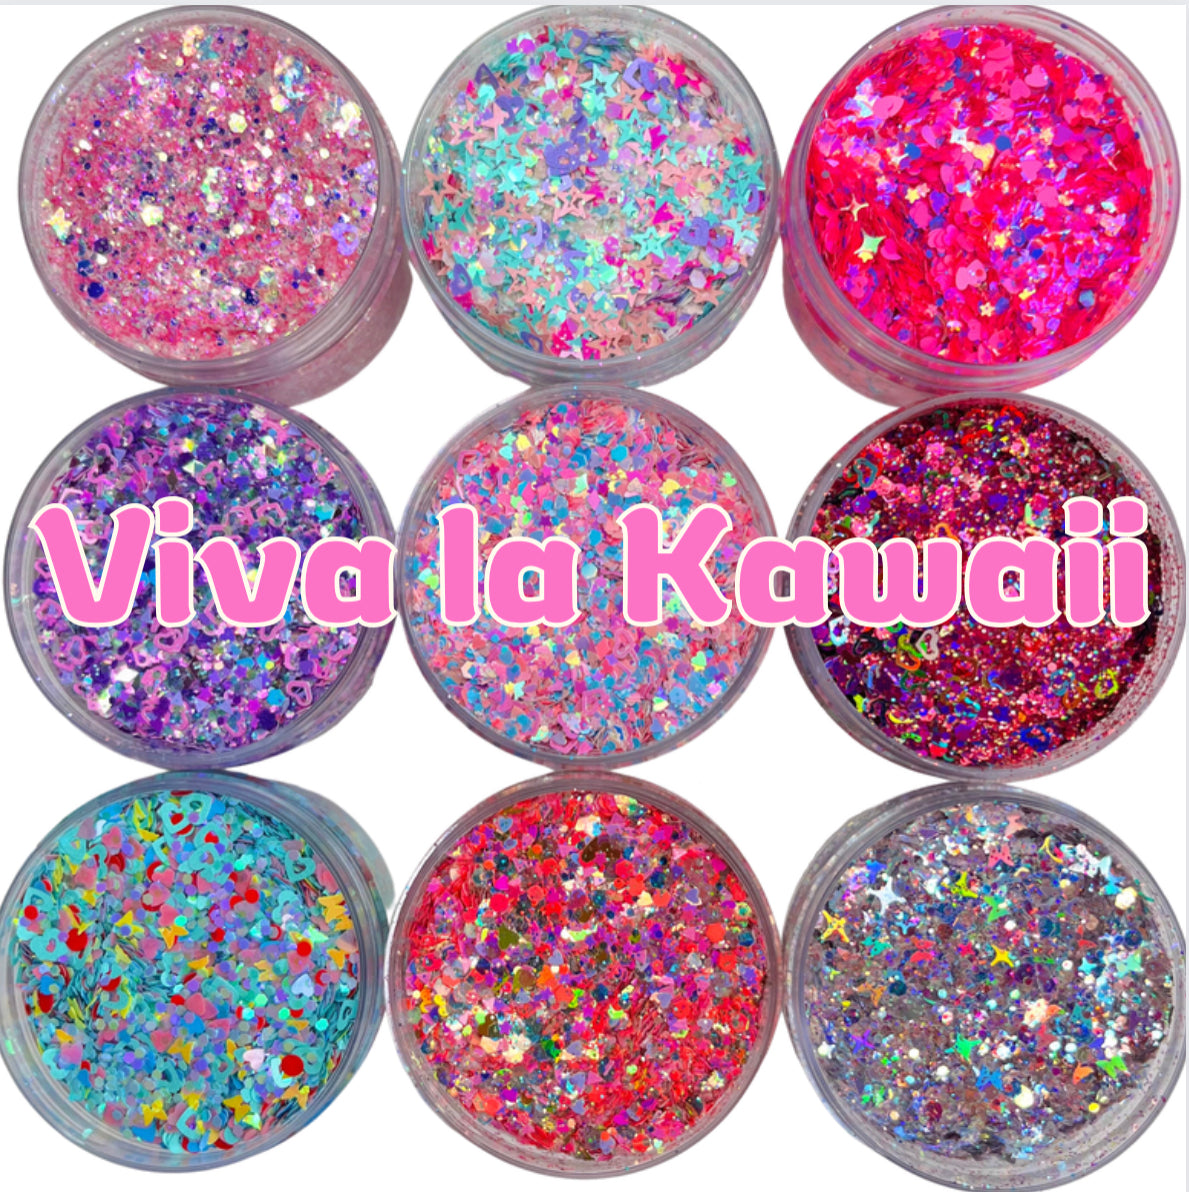 Viva la Kawaii - Stunna Glitter Mix Collection